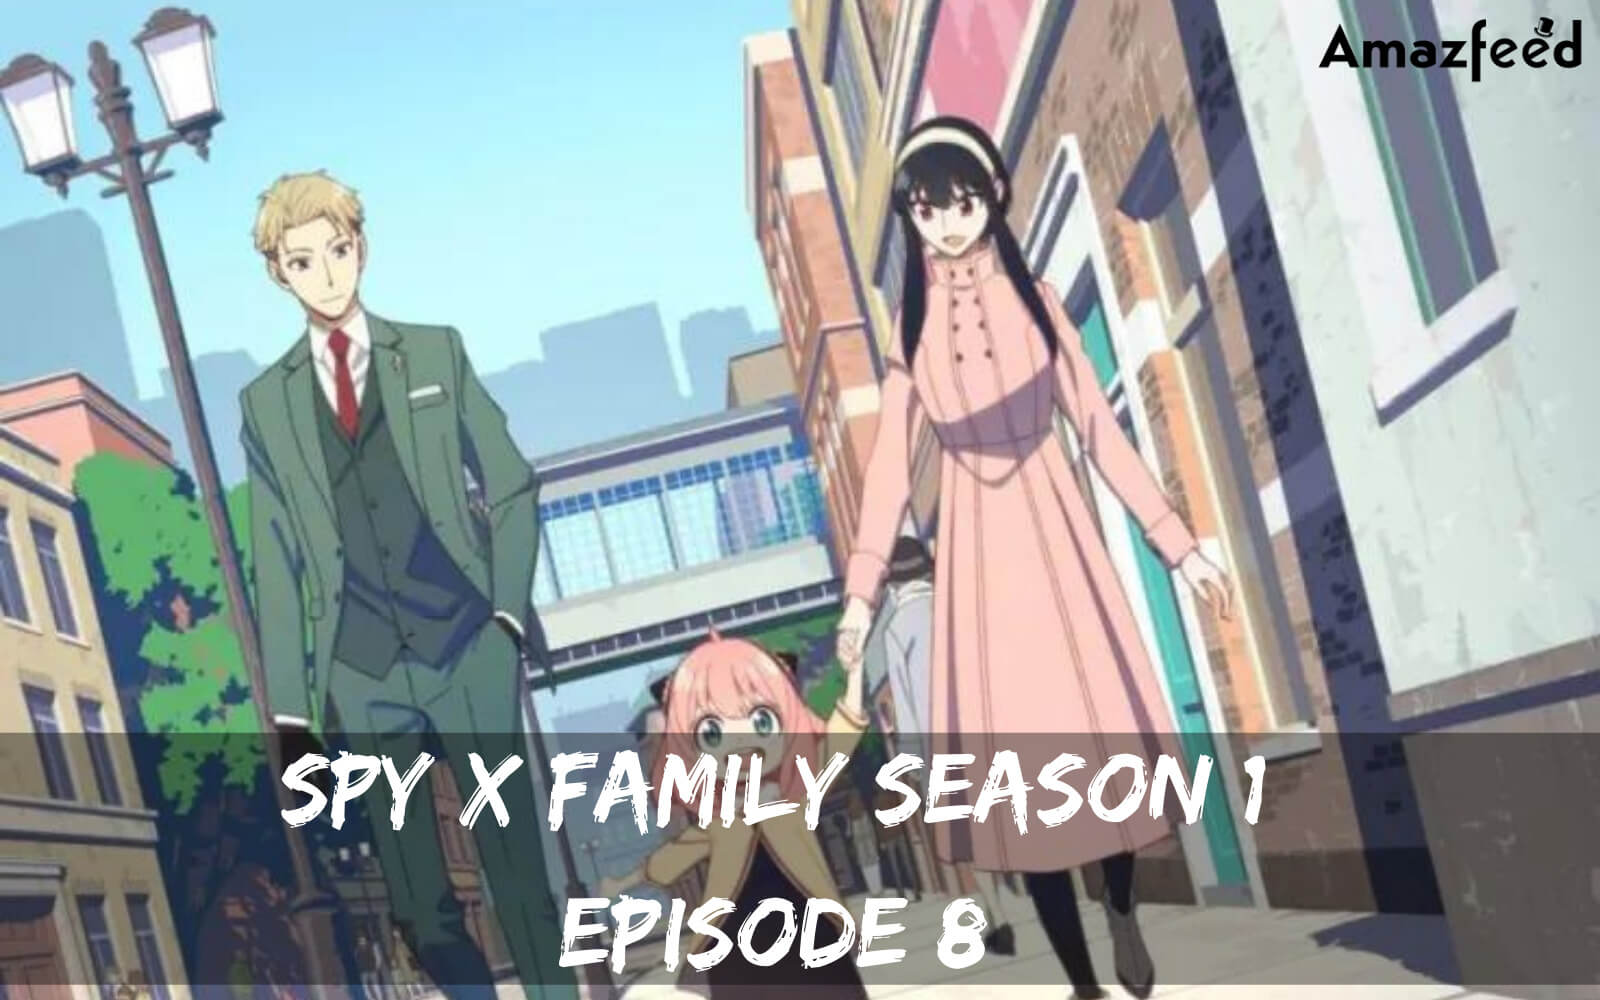 Spy x Family Season 1 Episode 8 release date